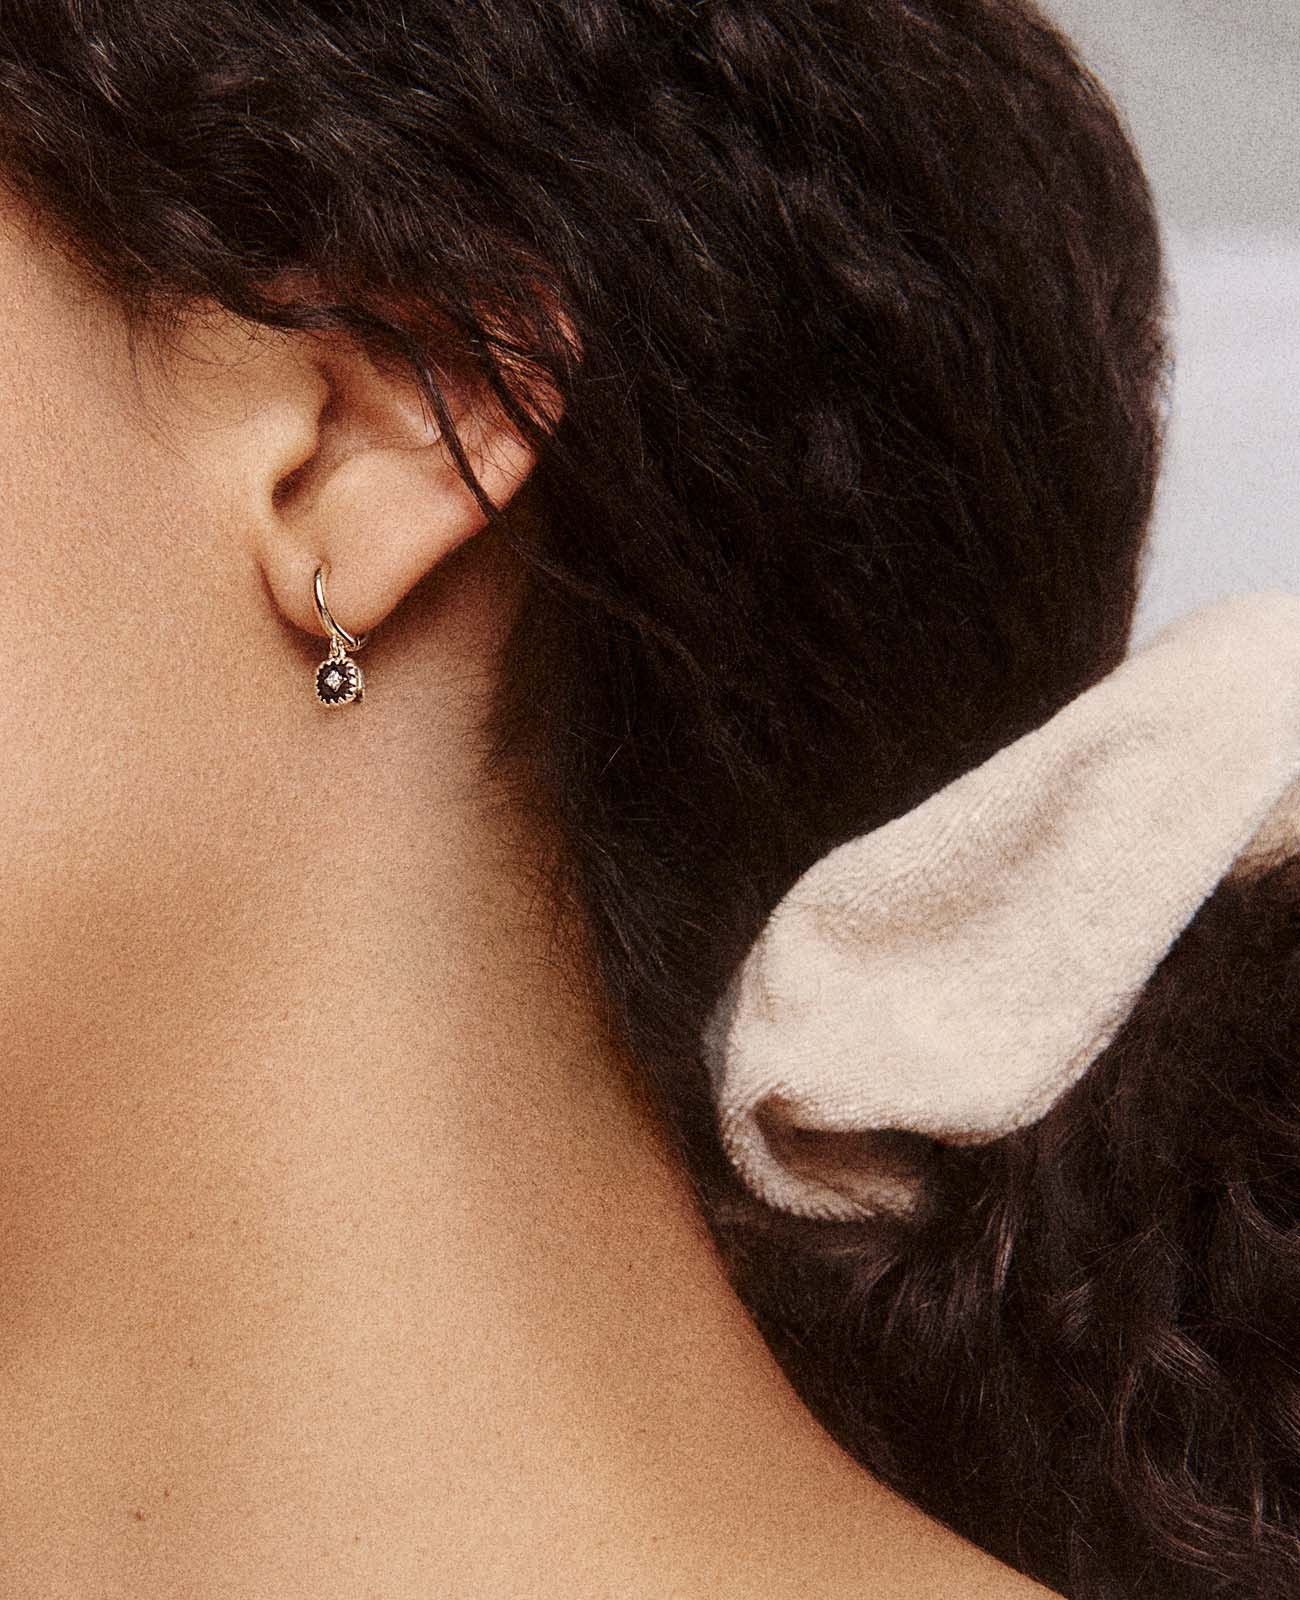 PIERROT WHITE earring pascale monvoisin jewelry paris